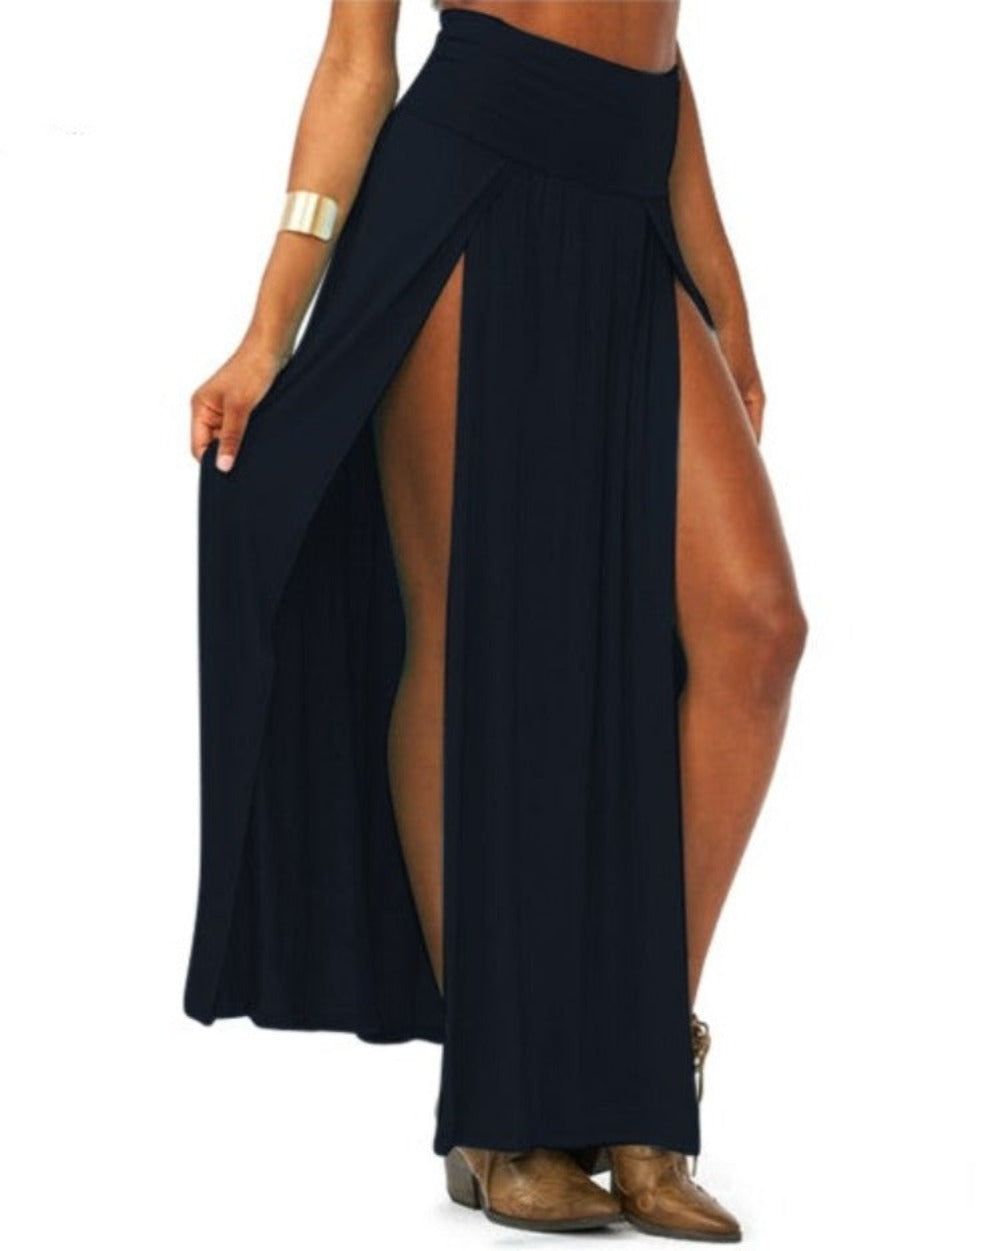 Renaissance High Waist Double Slit Maxi Skirt (10 Colors) One Size Best Gift Shoppers